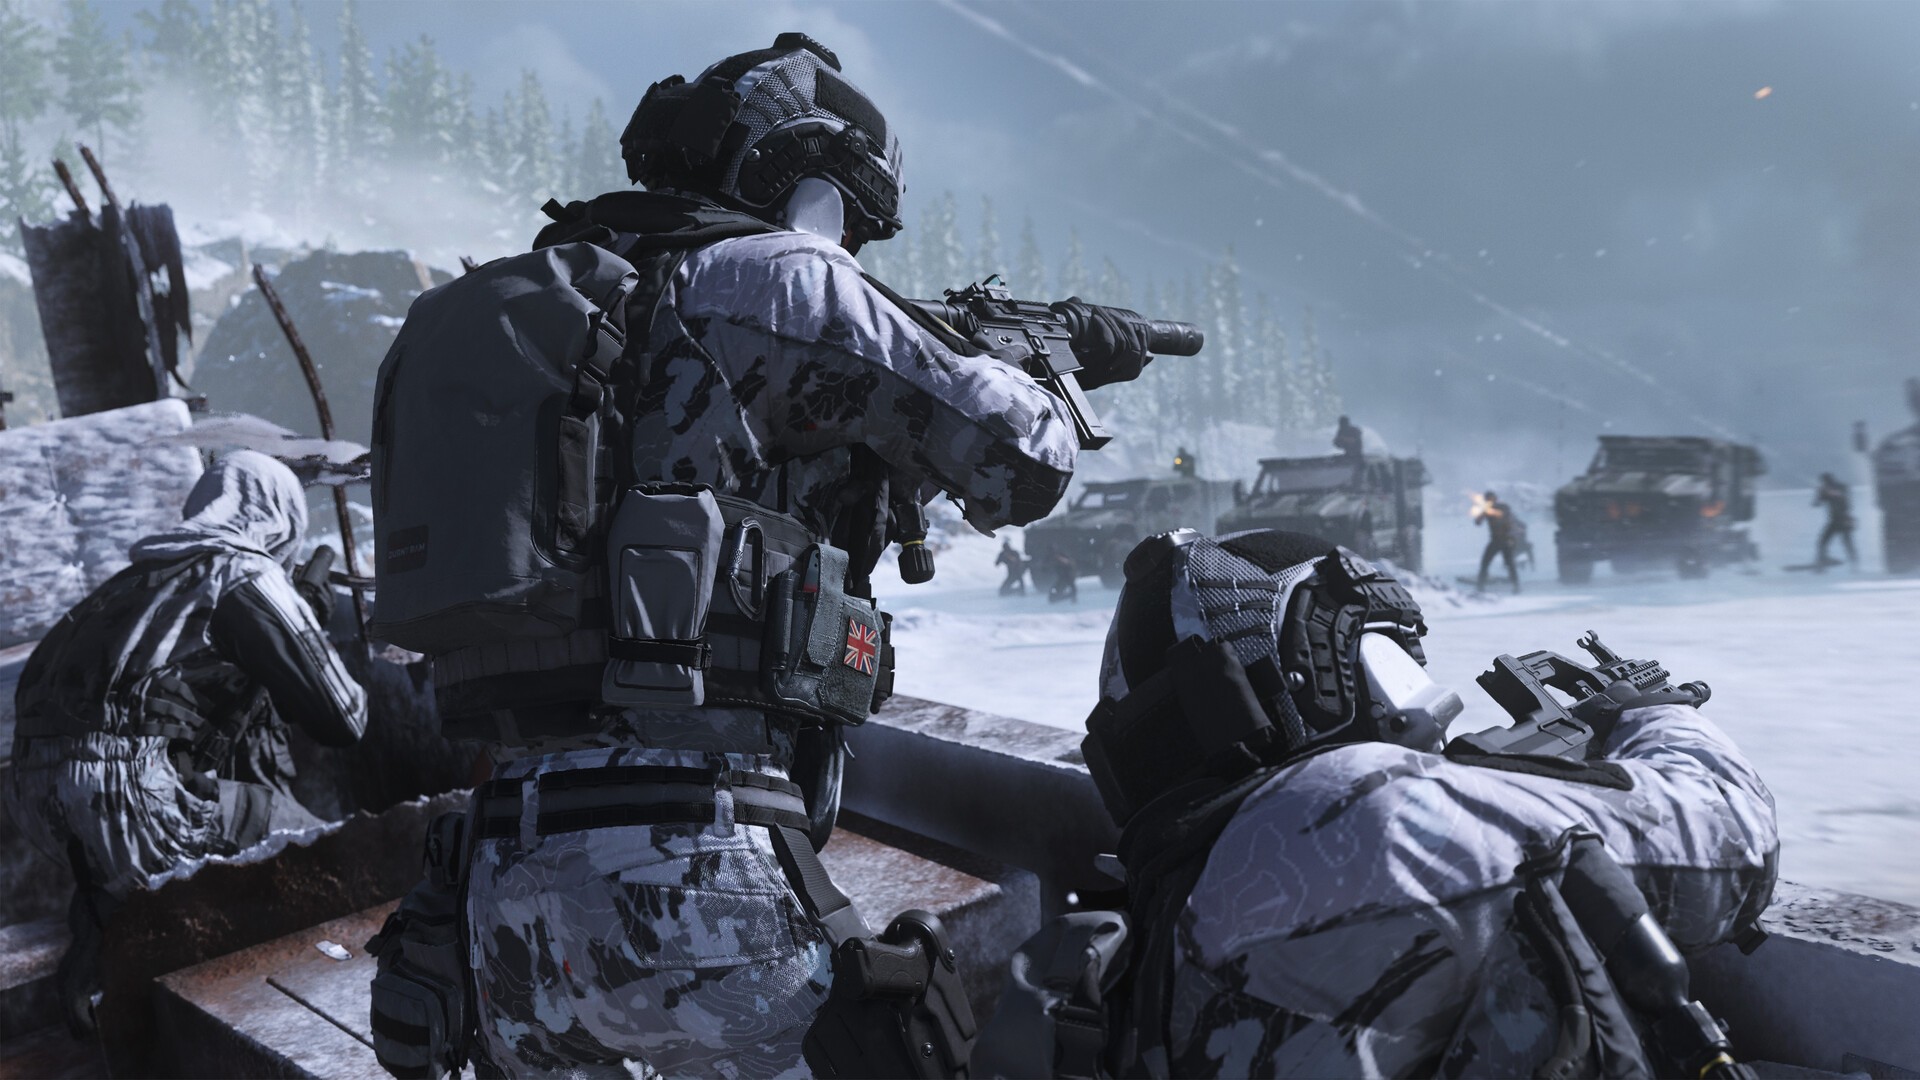 Call of Duty: Modern Warfare III Vault Edition Xbox One, Xbox